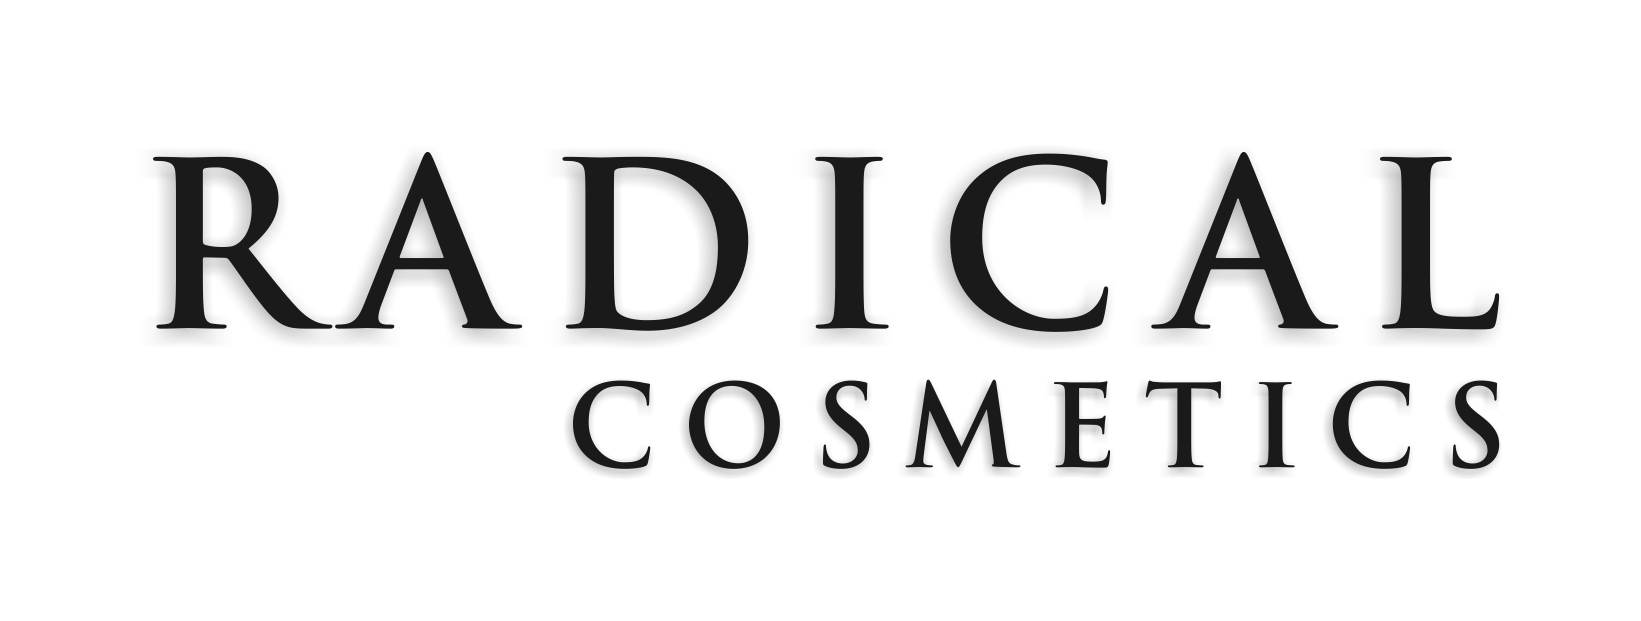 Radical Cosmetics logo